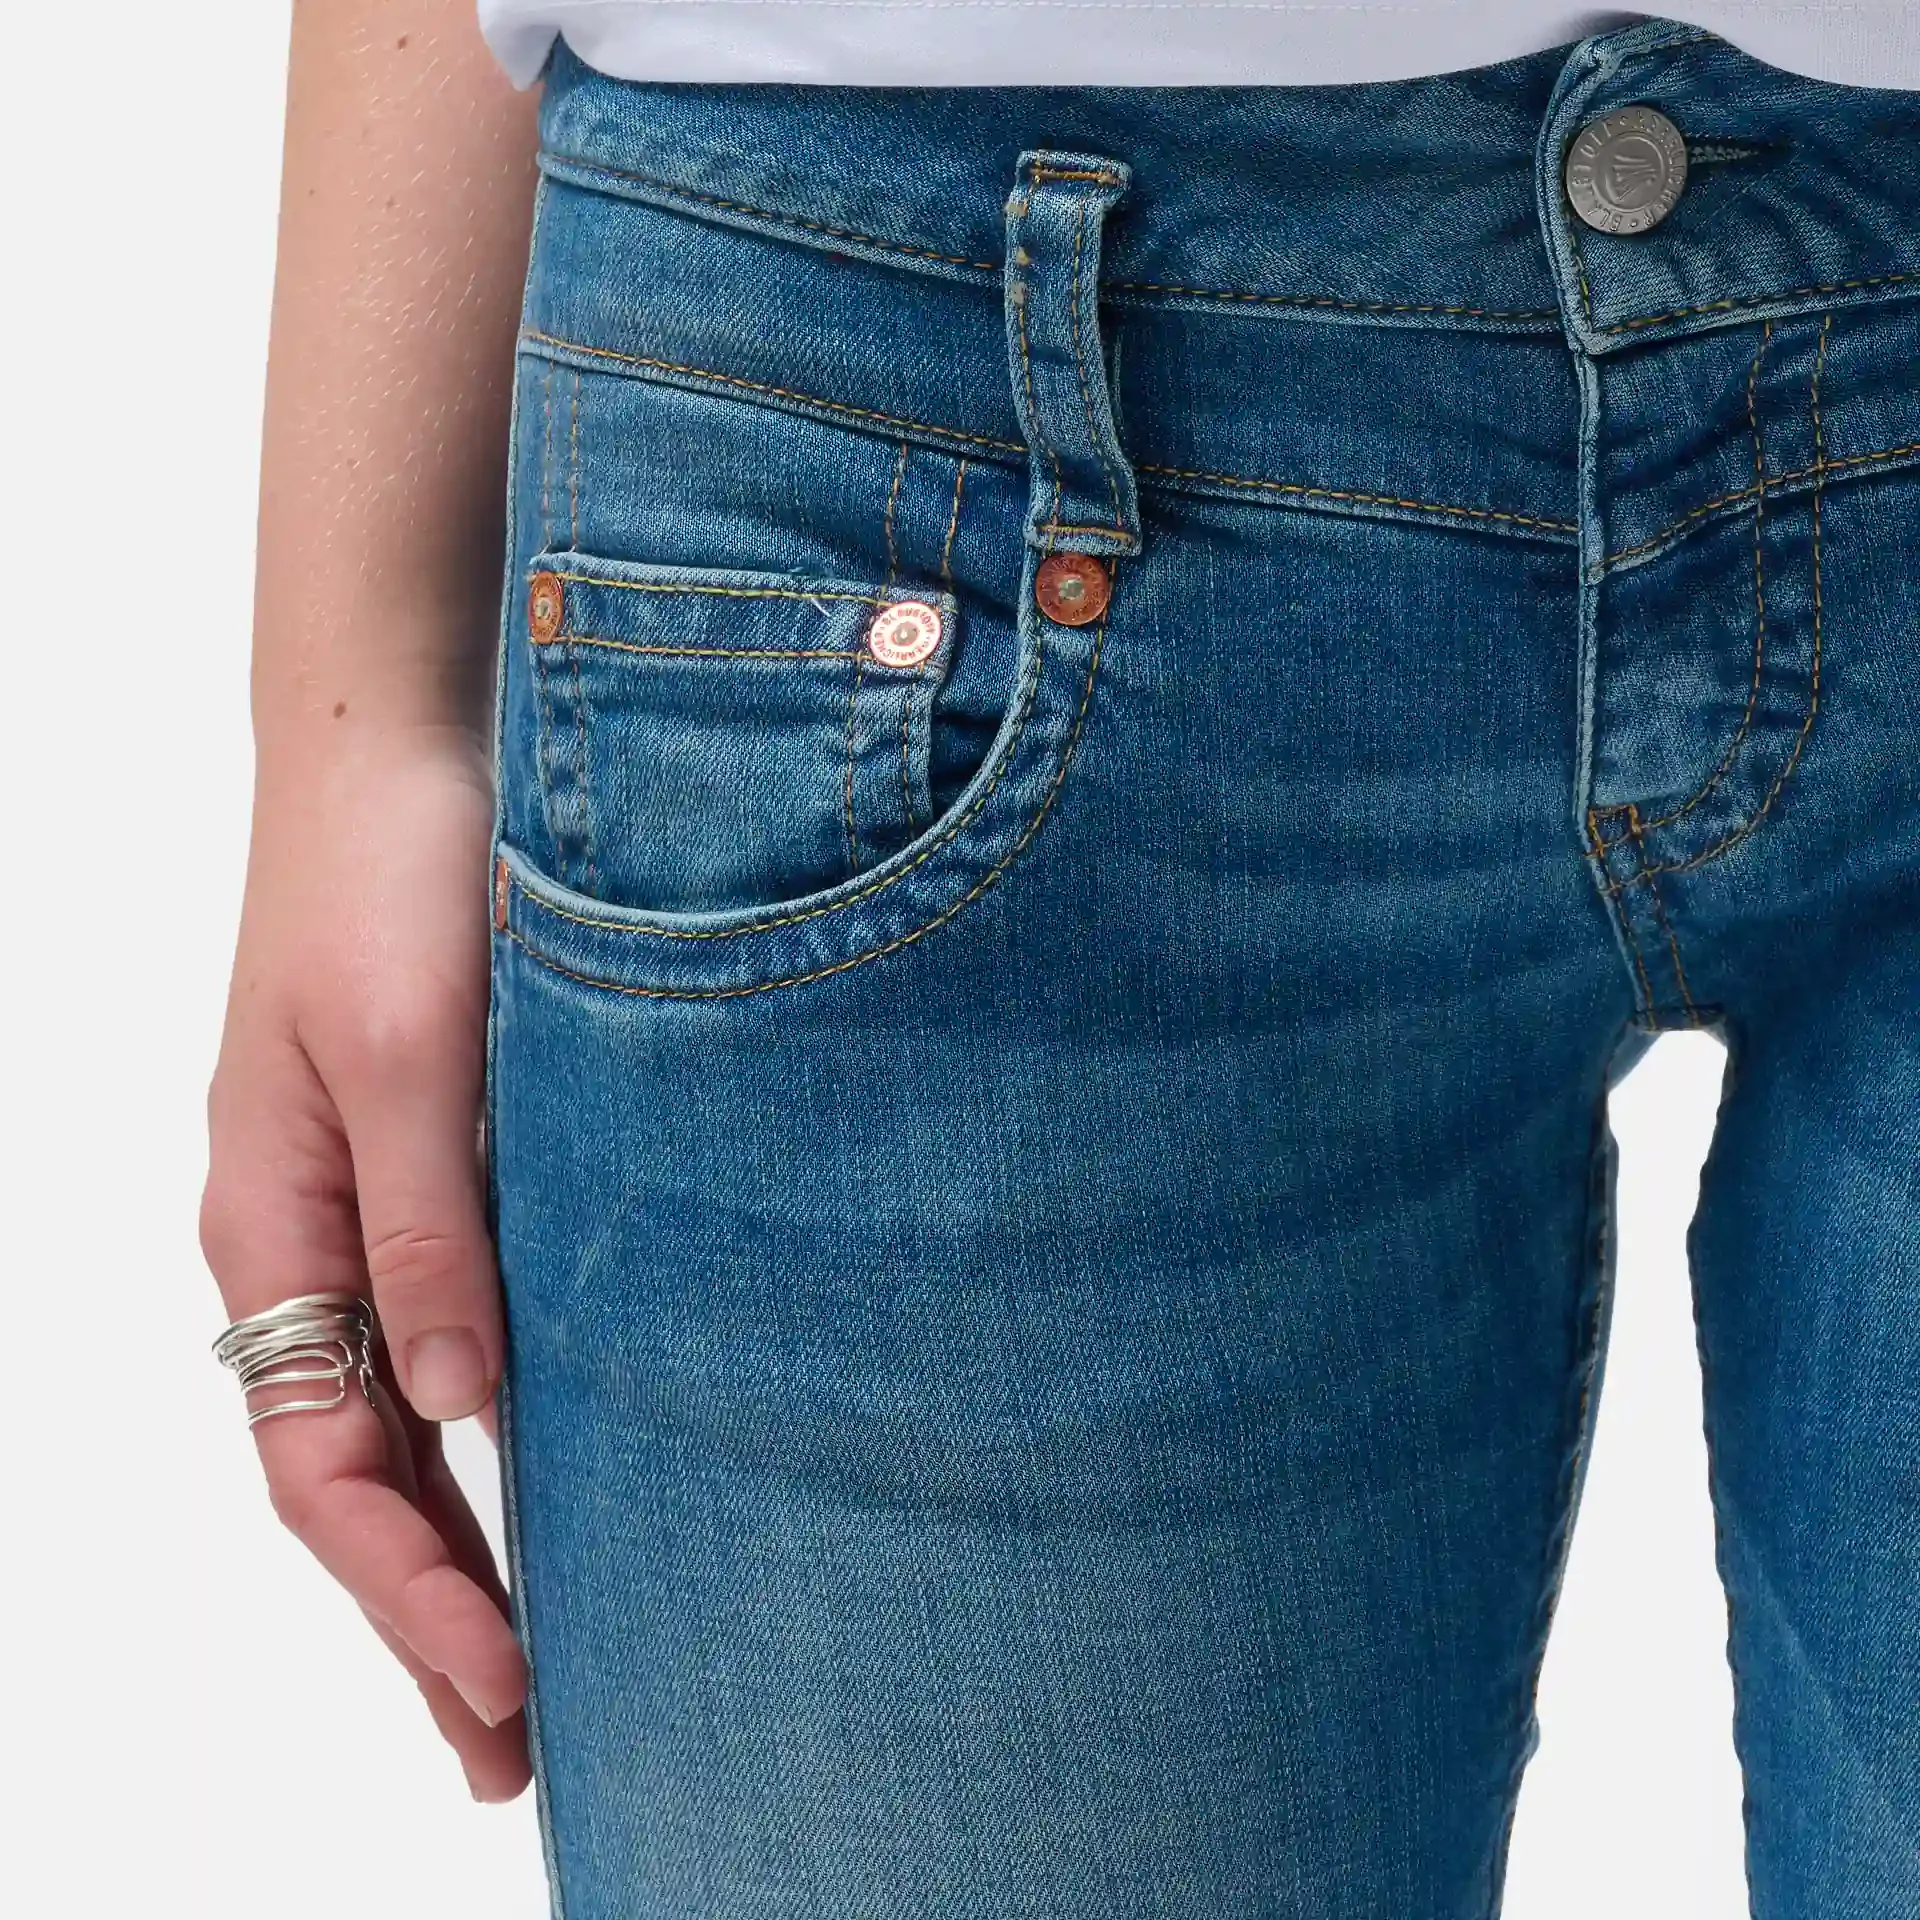 Herrlicher Pitch Slim Organic Jeans Blue Sea